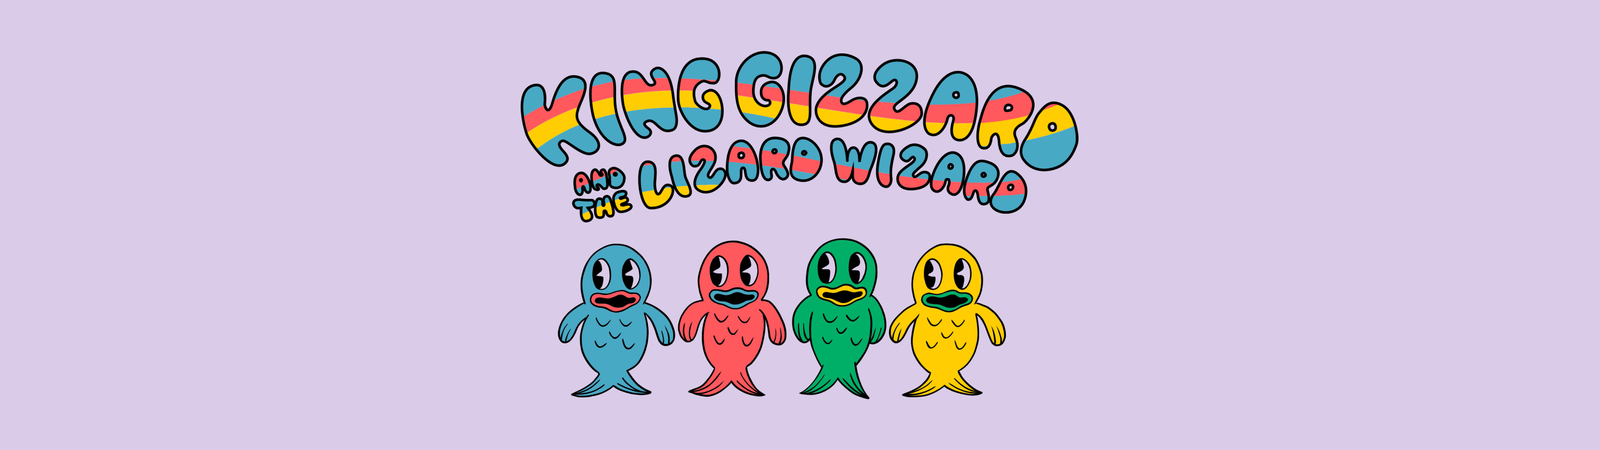 King Gizzard and The Lizard Wizard / Vinyl